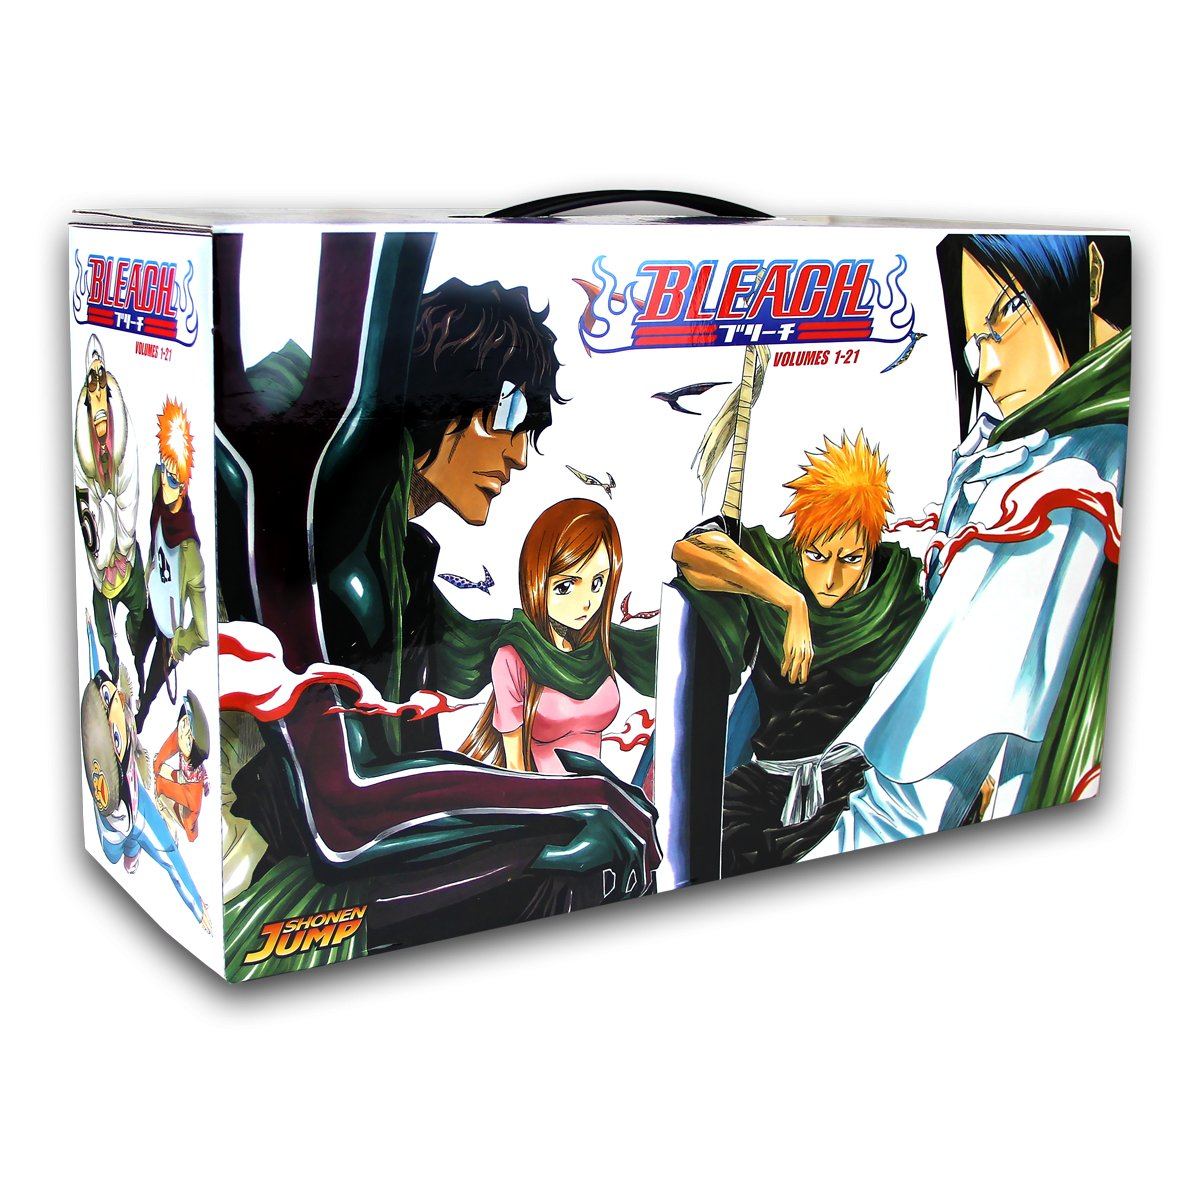 Bleach - Volumes 1-21 Books collection - Manga - Paperback - Tite Kubo Young Adult Viz Media